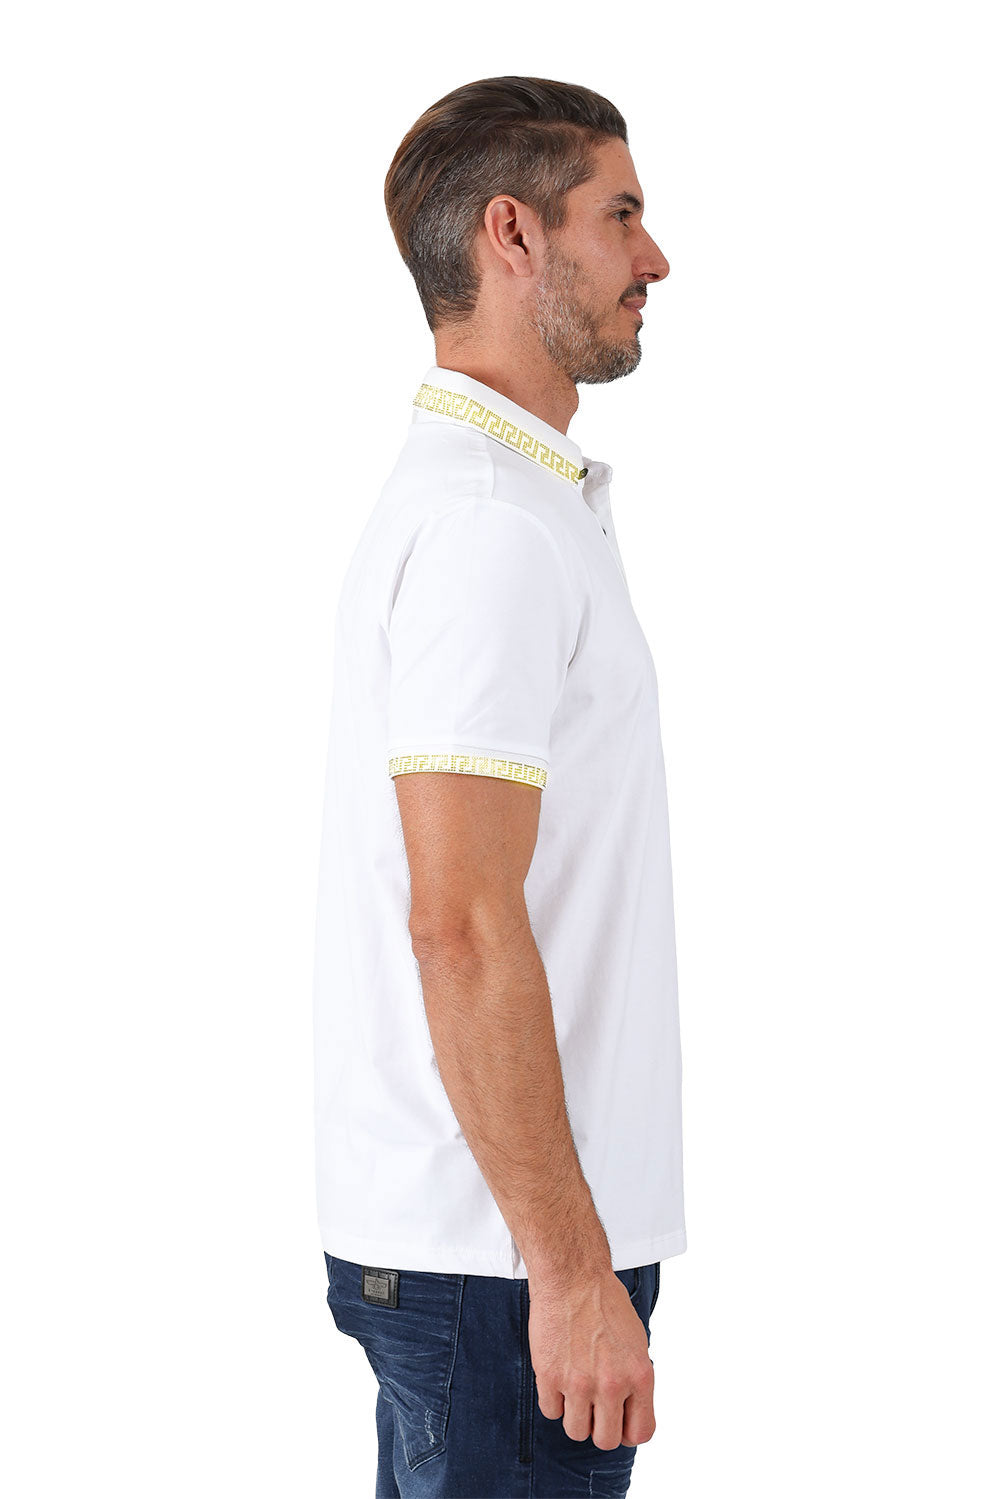 BARABAS men's rhinestone Greek key pattern polo shirt PS118 White Gold